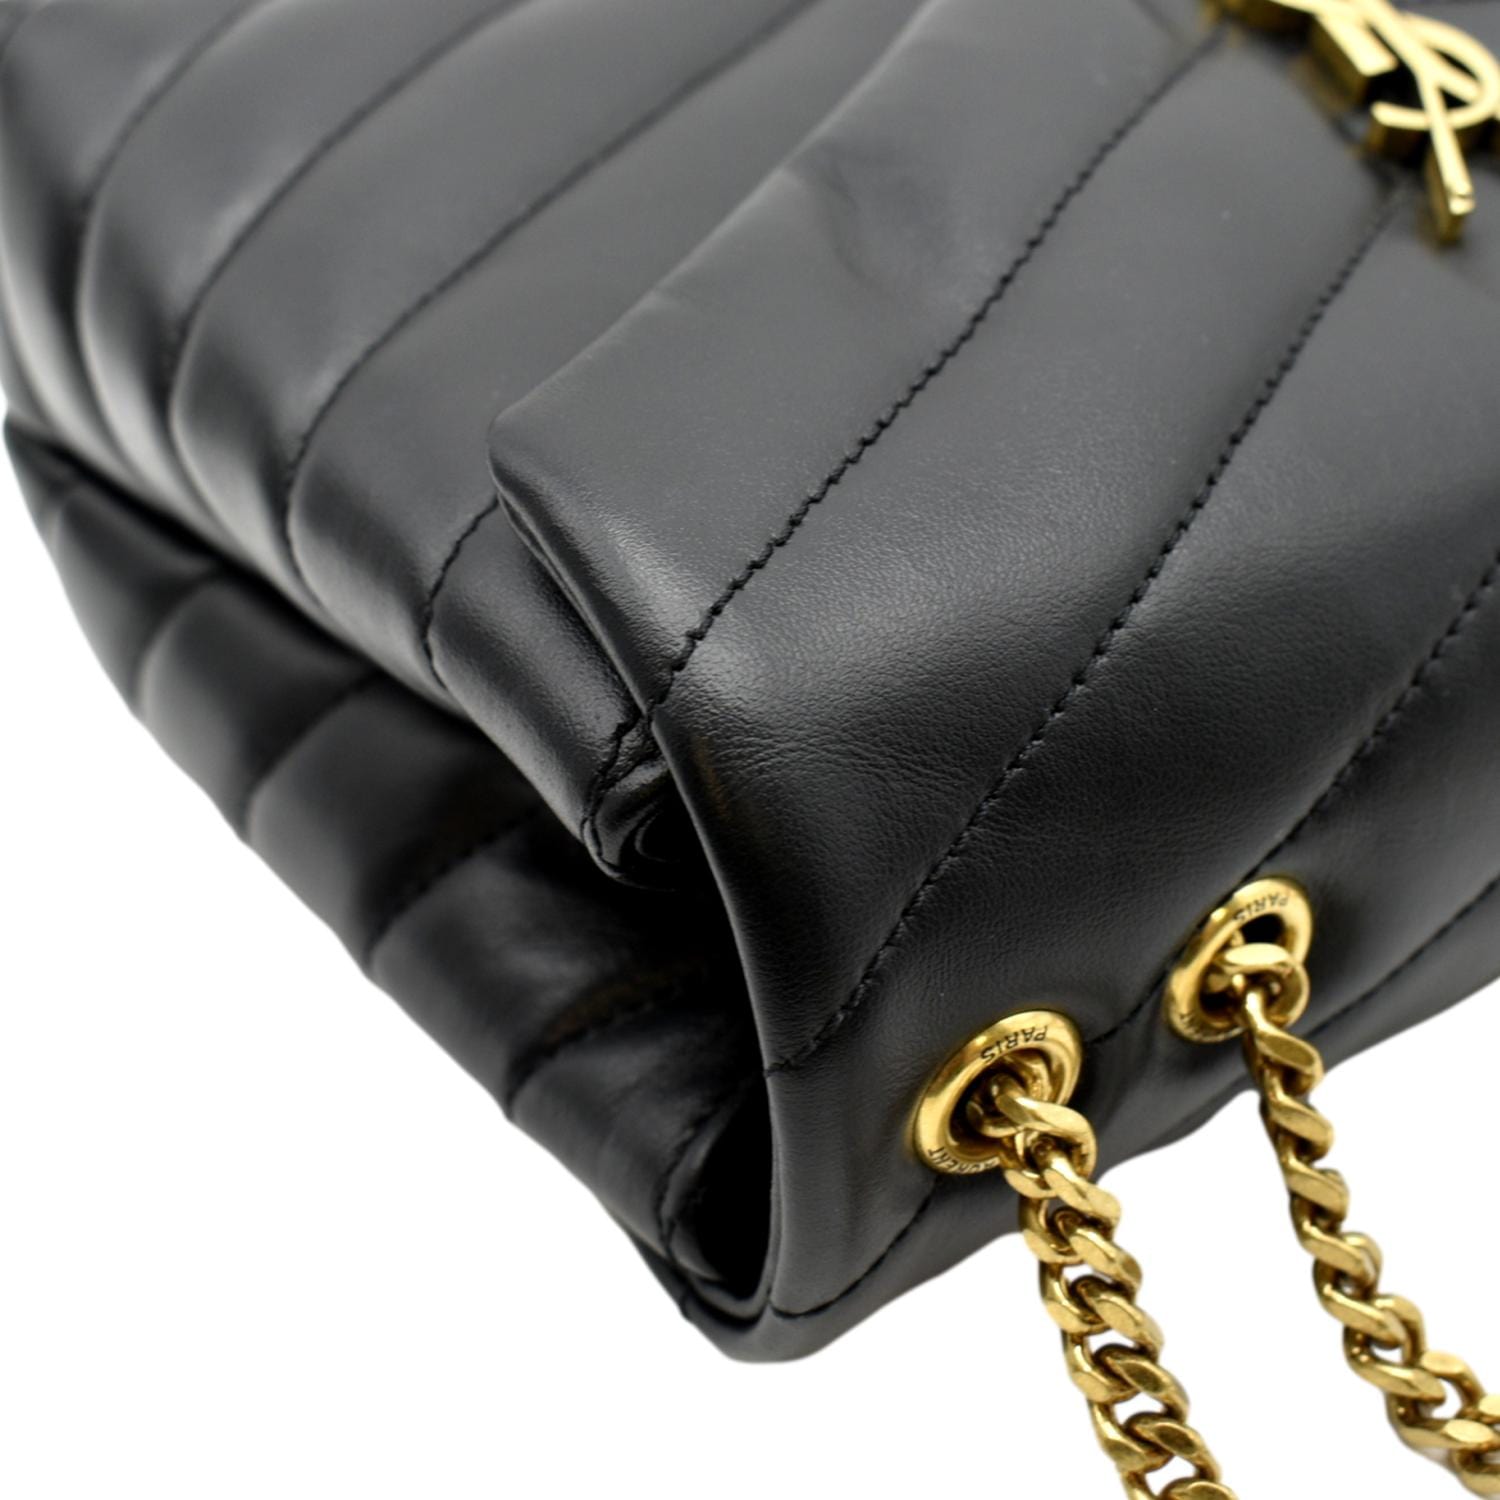 Chanel bag chain shoulder black gold metal fittings matelasse